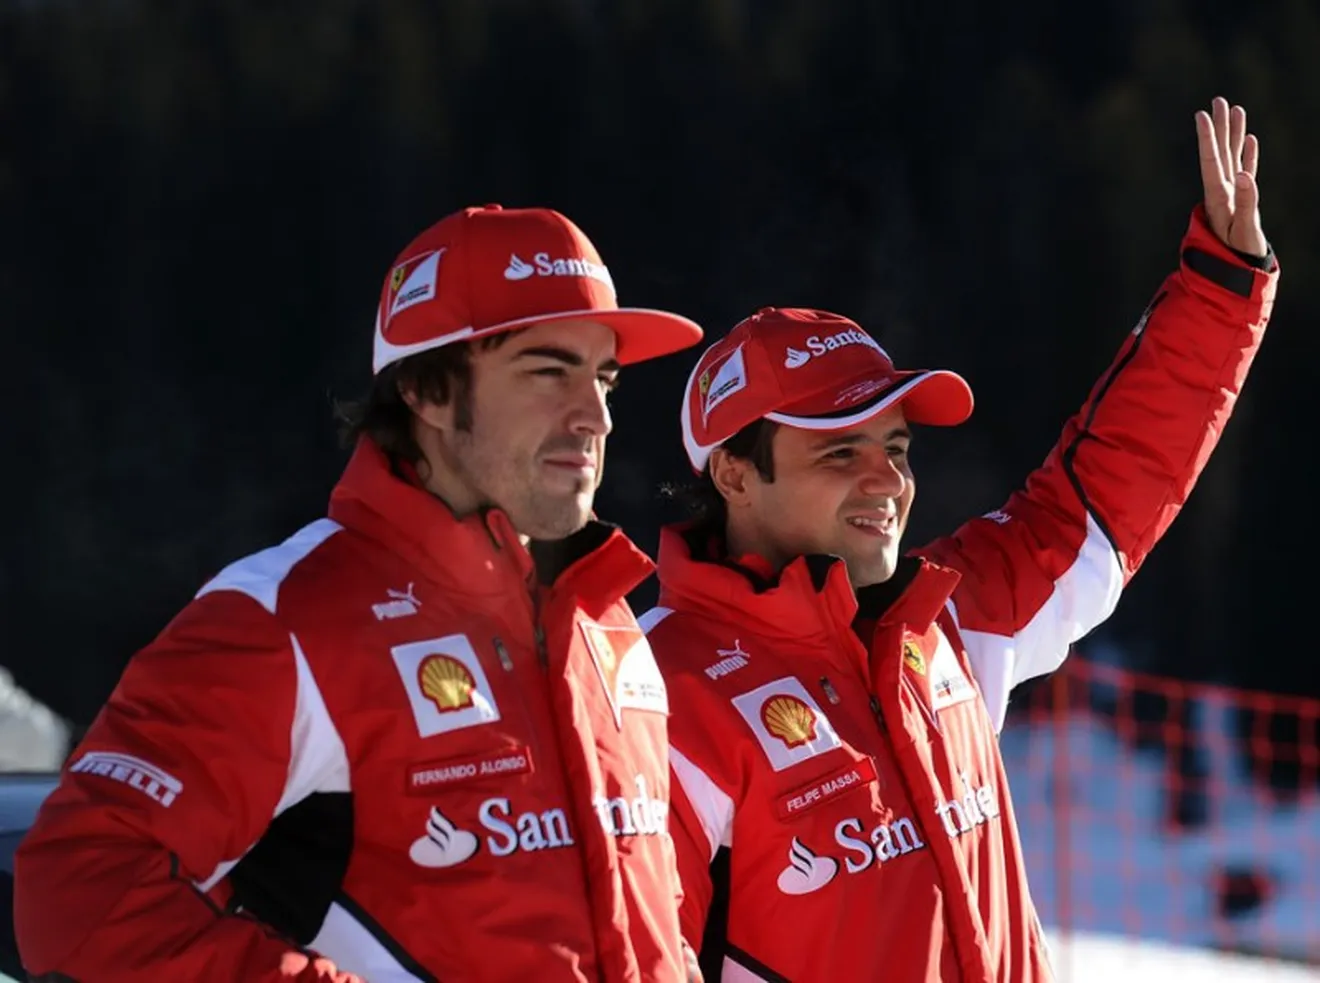 Alonso y Massa